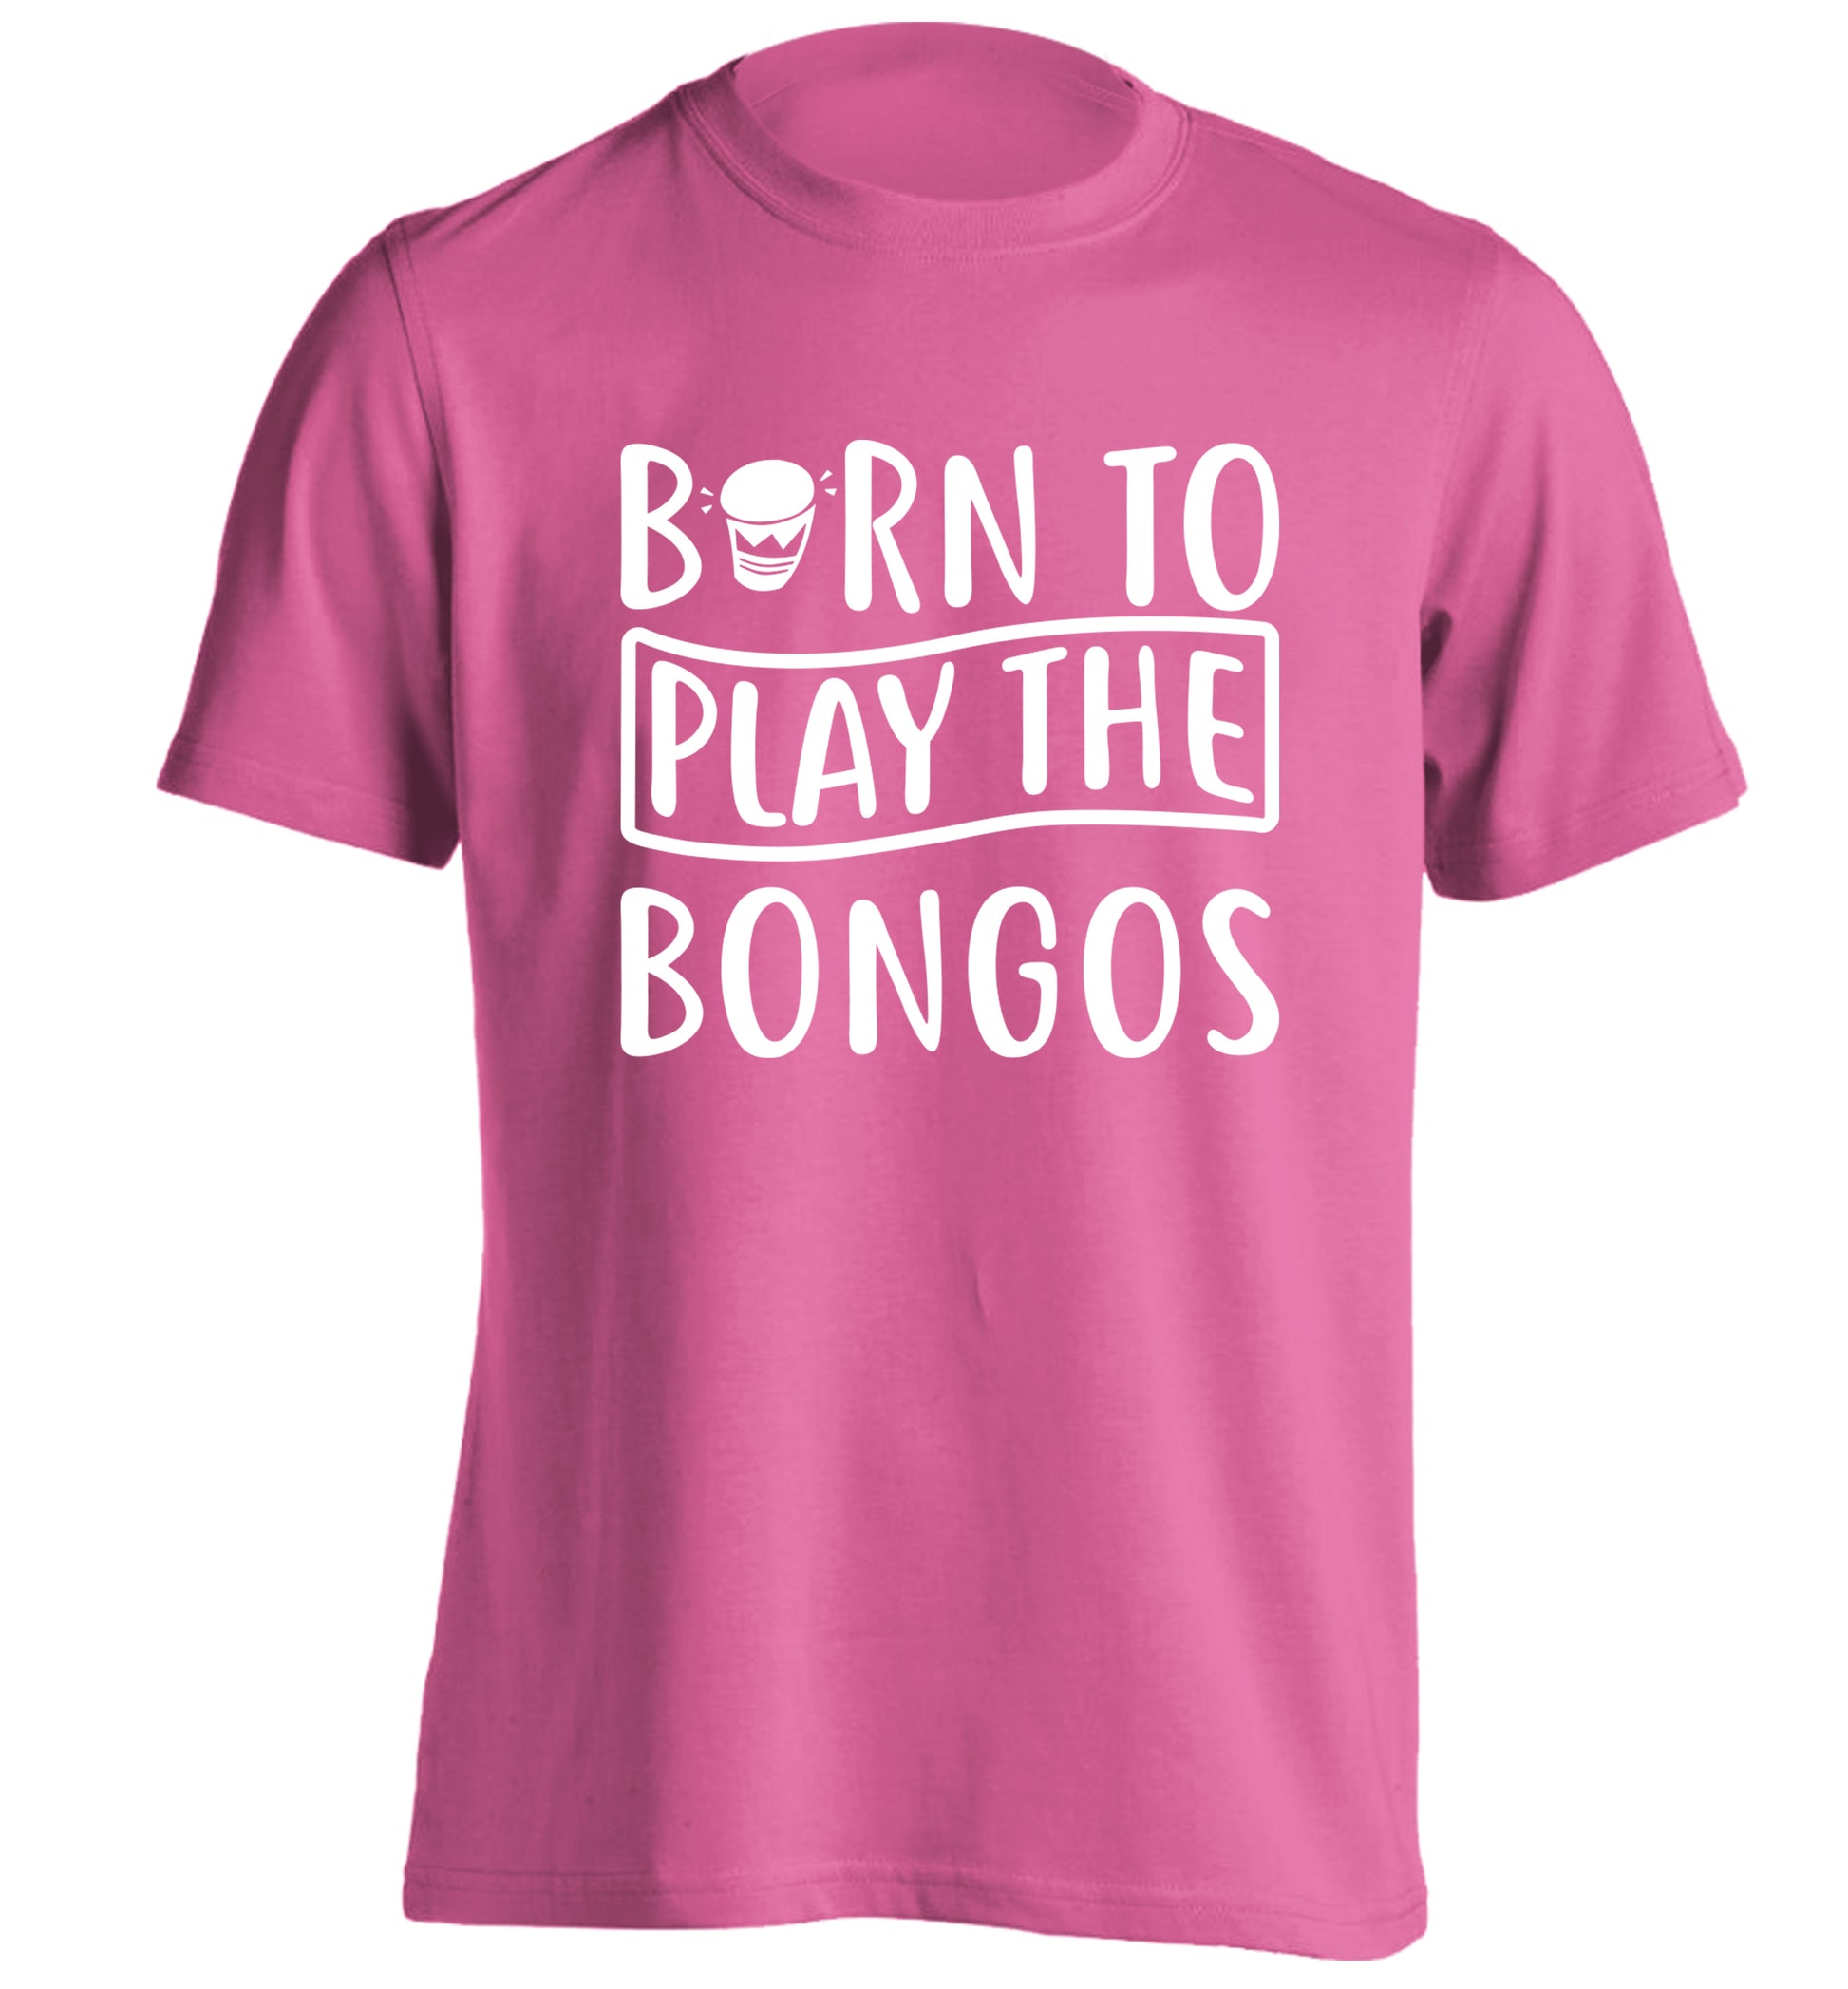 Born to play the bongos adults unisex pink Tshirt 2XL